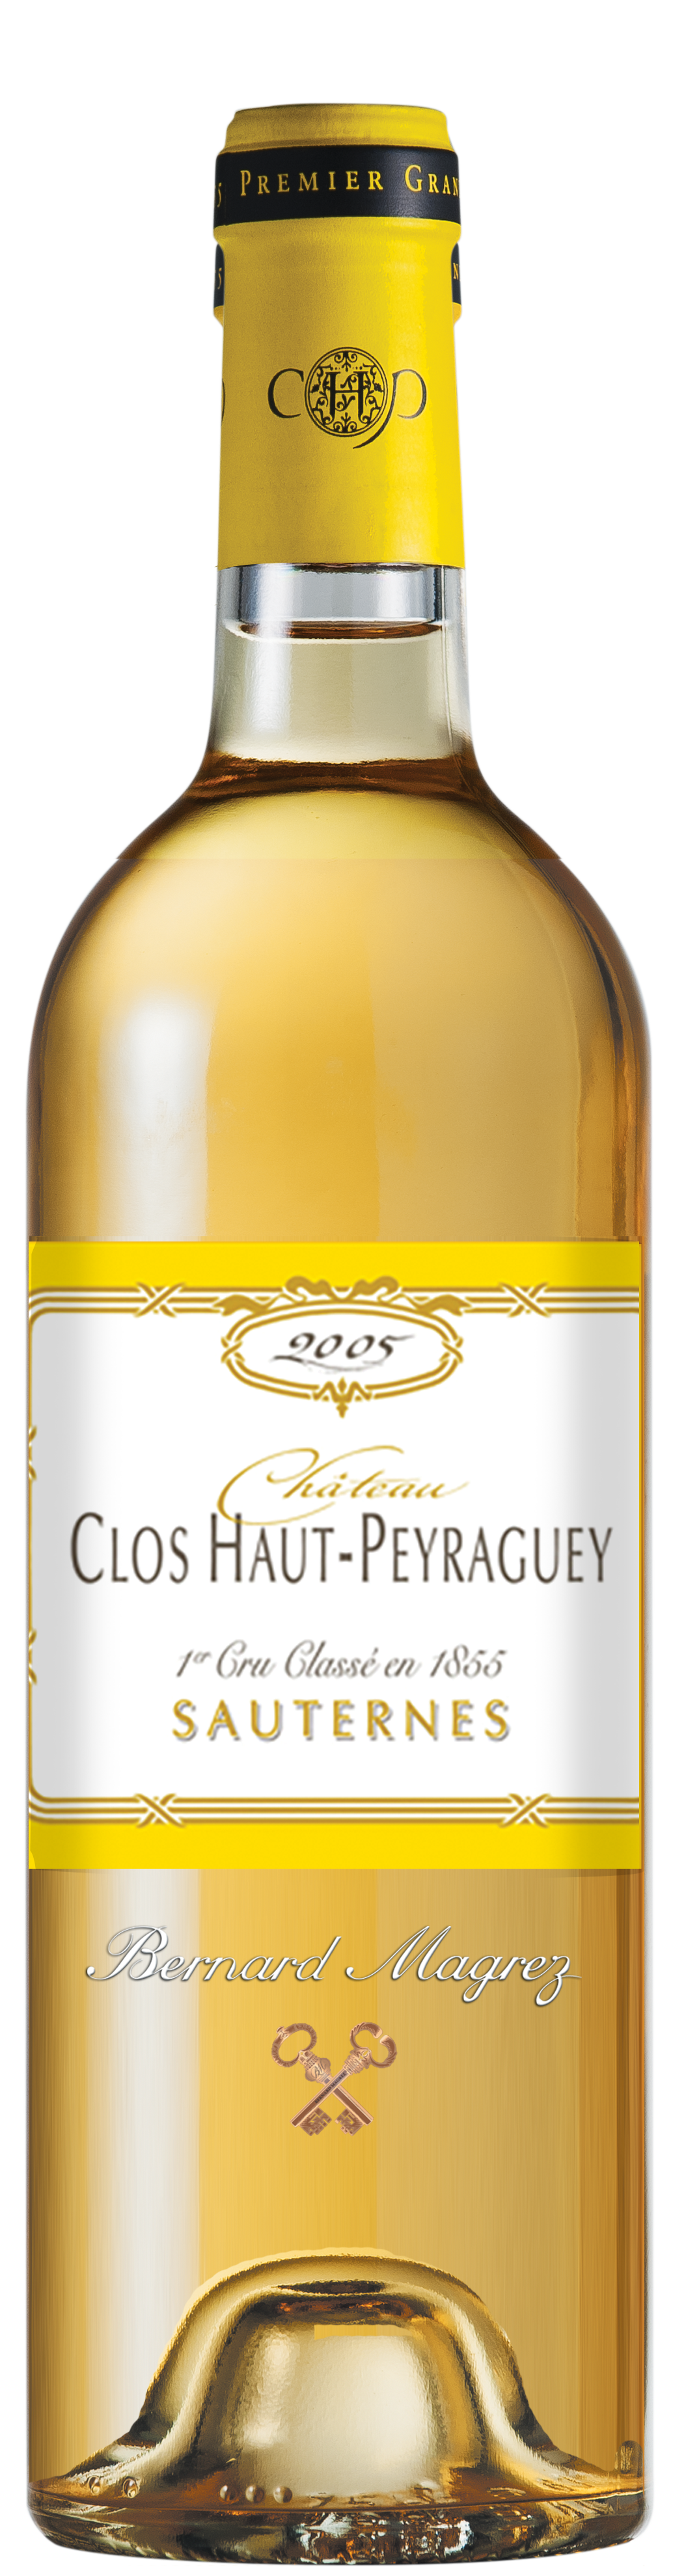 2005 Clos Haut-Peyraguey, Sauternes 'Grand Cru Classé' 375ml.